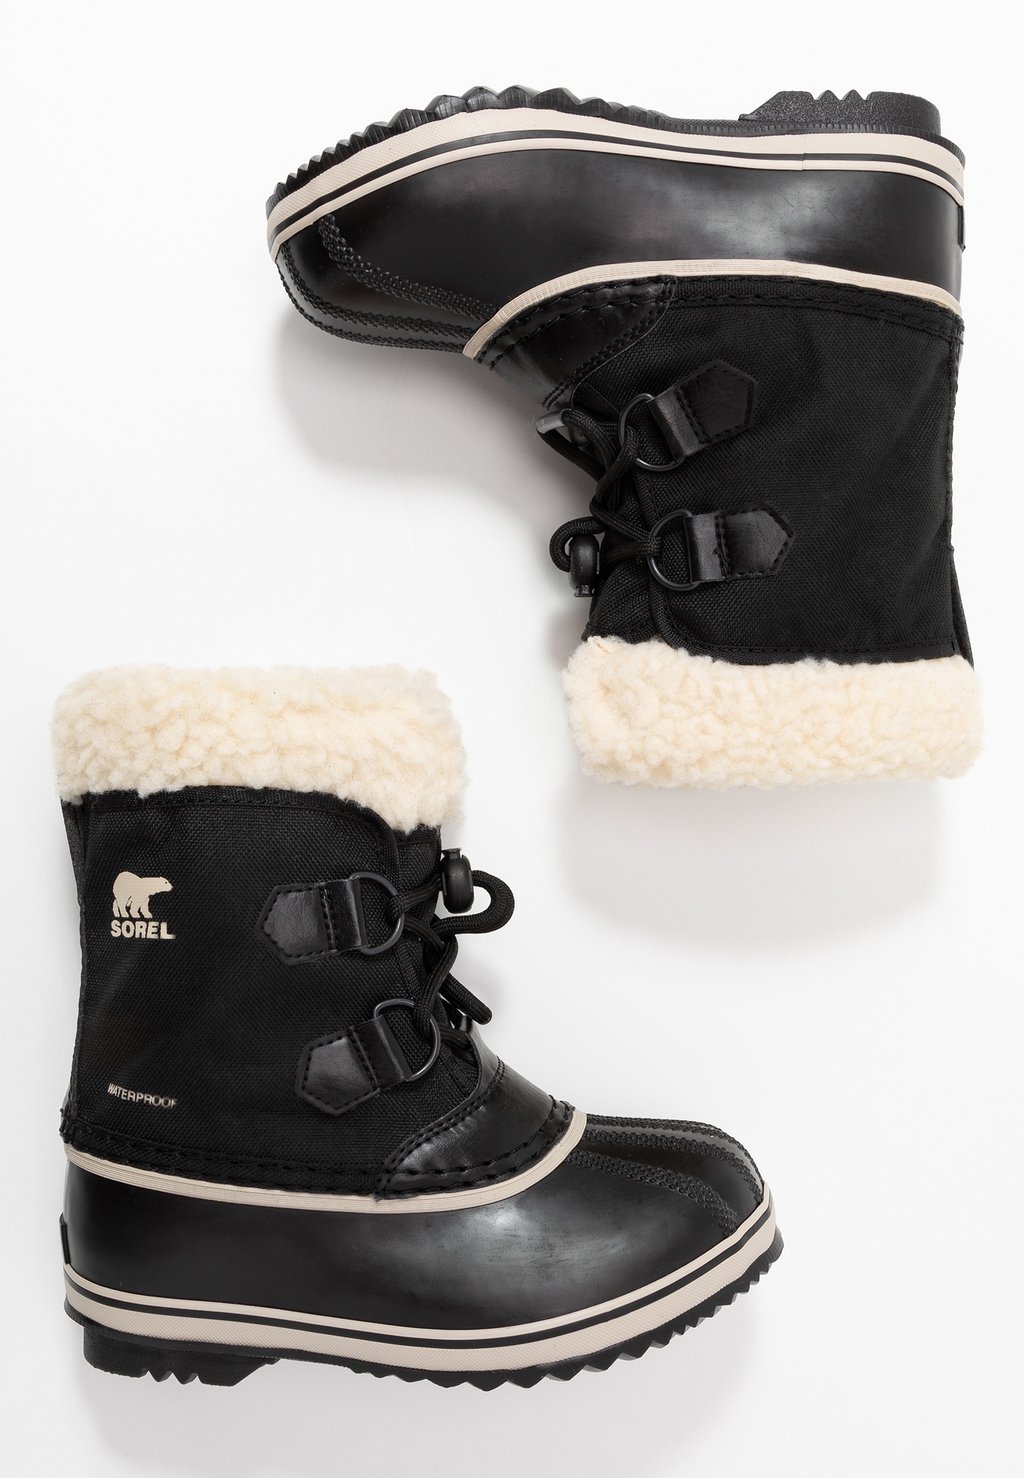 Сапоги зимние/зимние ботинки CHILDRENS YOOT PAC UNISEX Sorel, цвет black